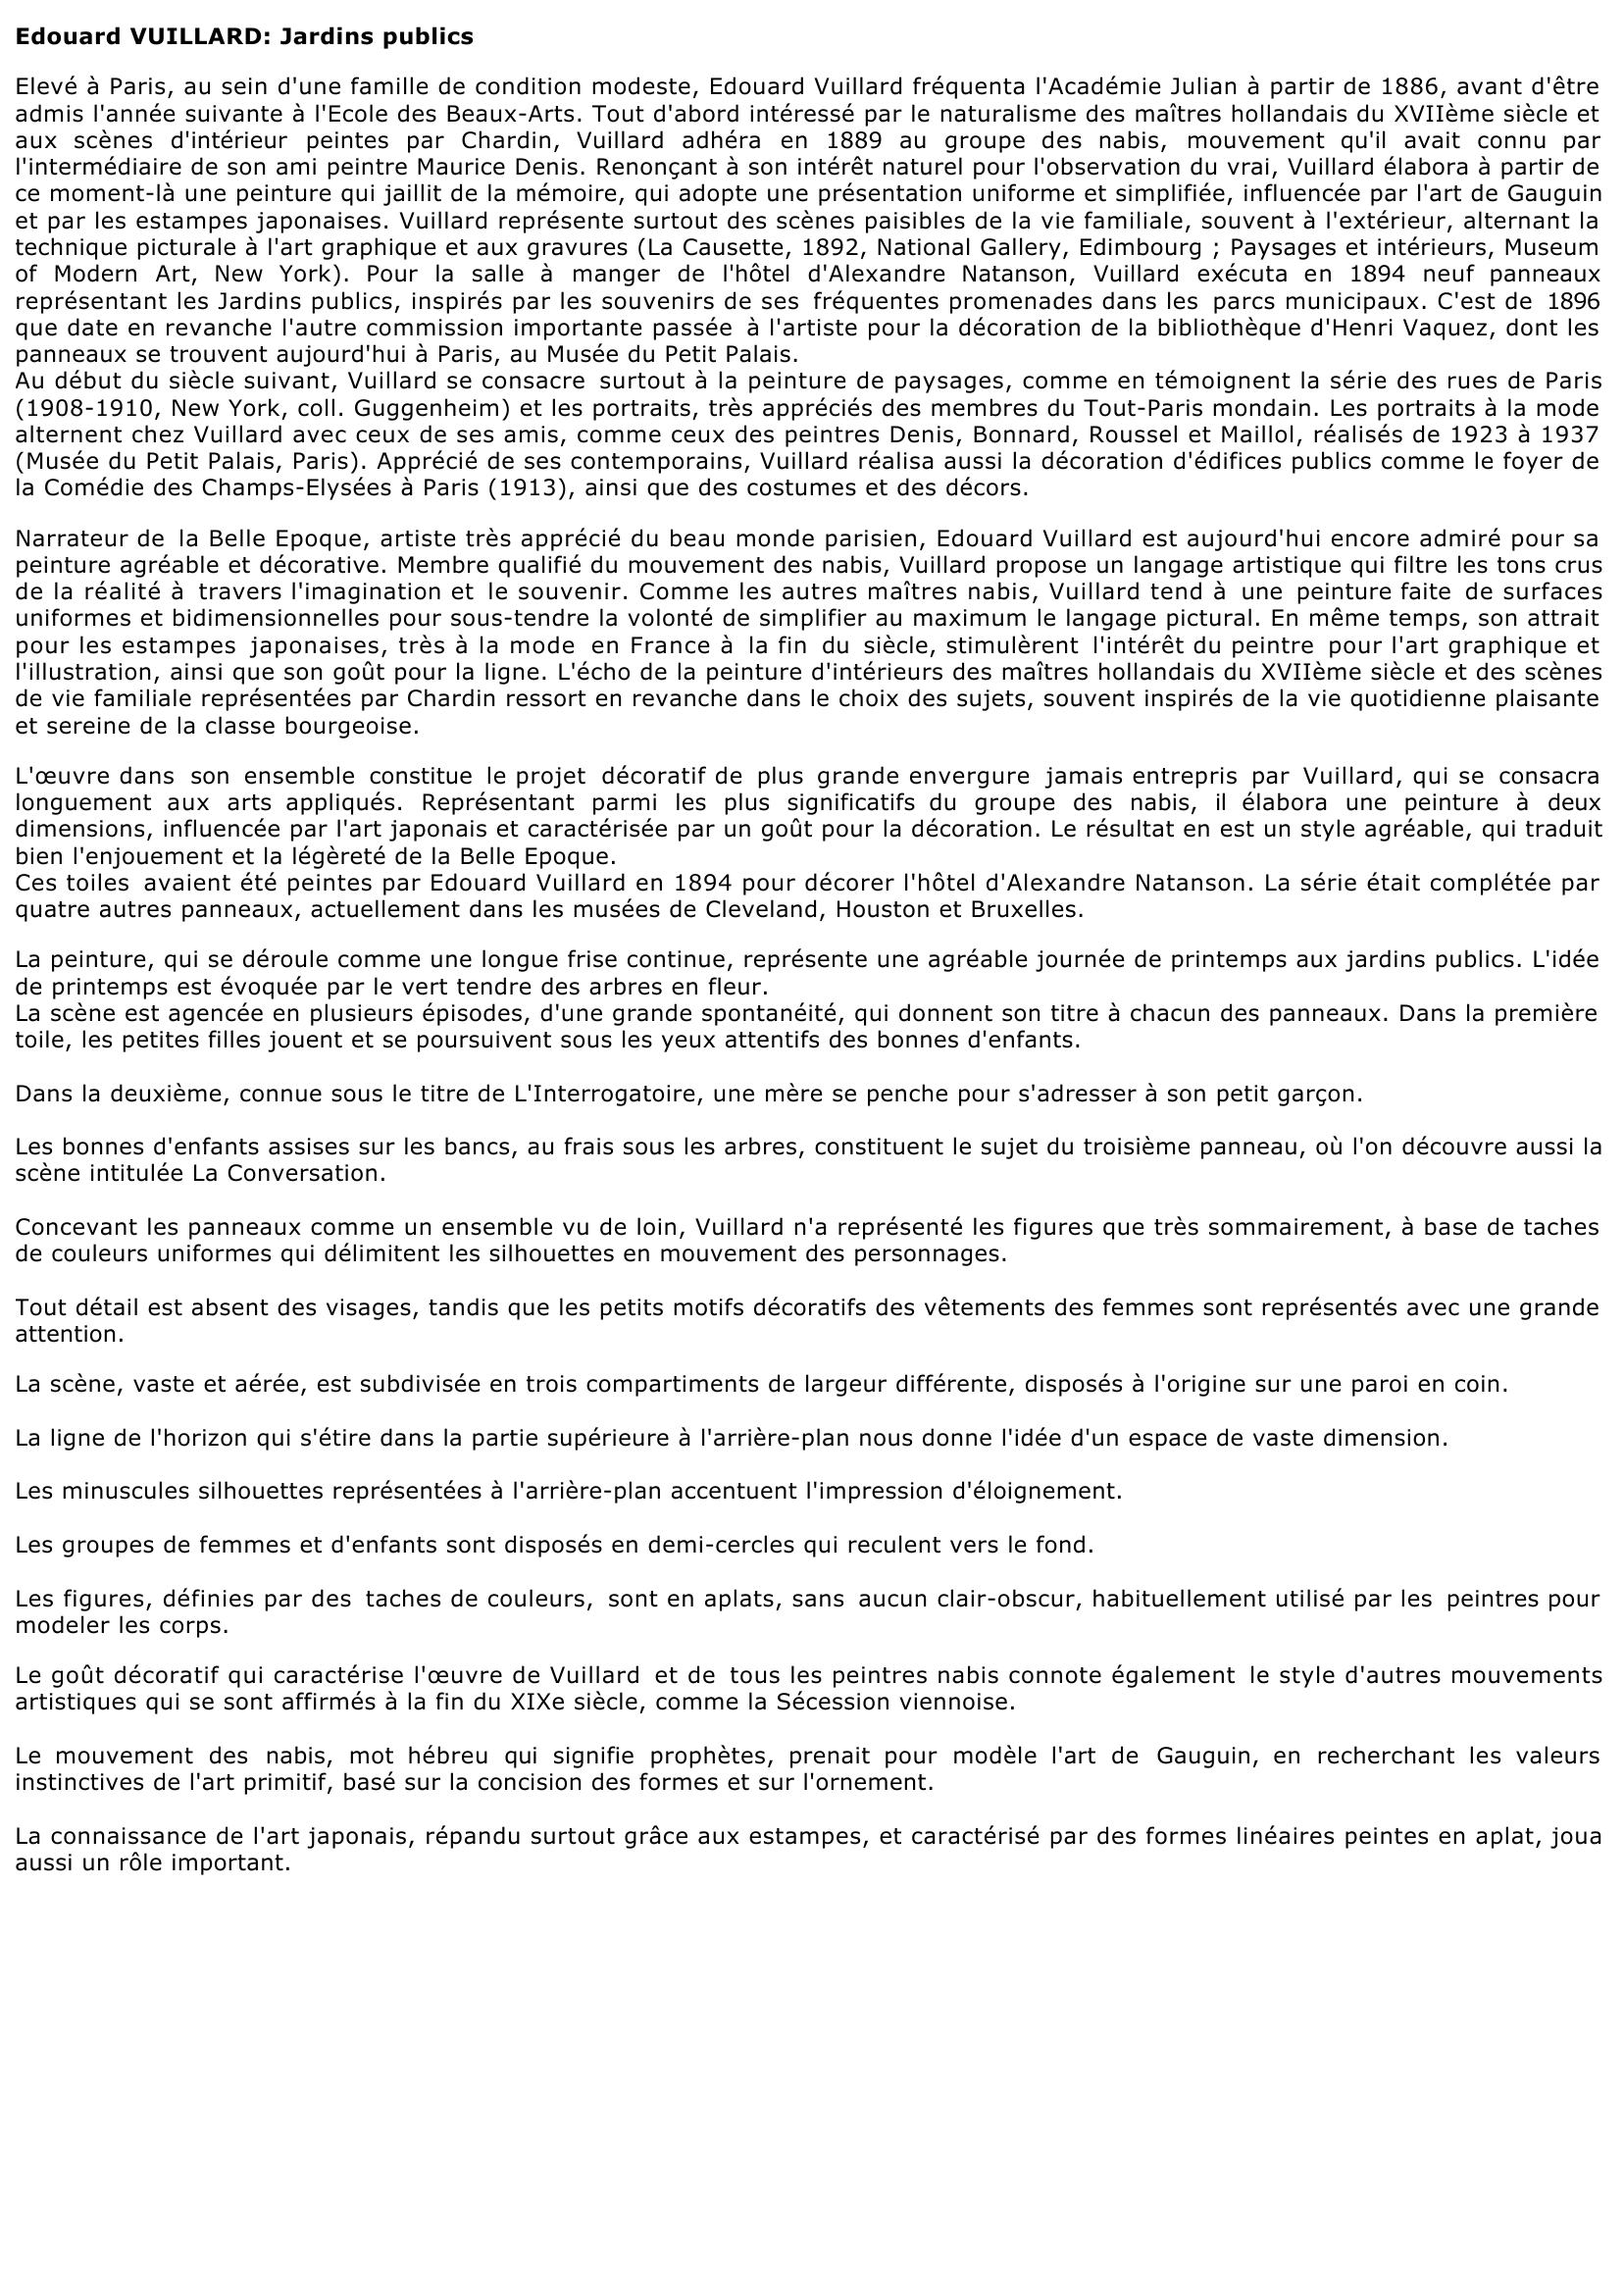 Prévisualisation du document Edouard VUILLARD: Jardins publics